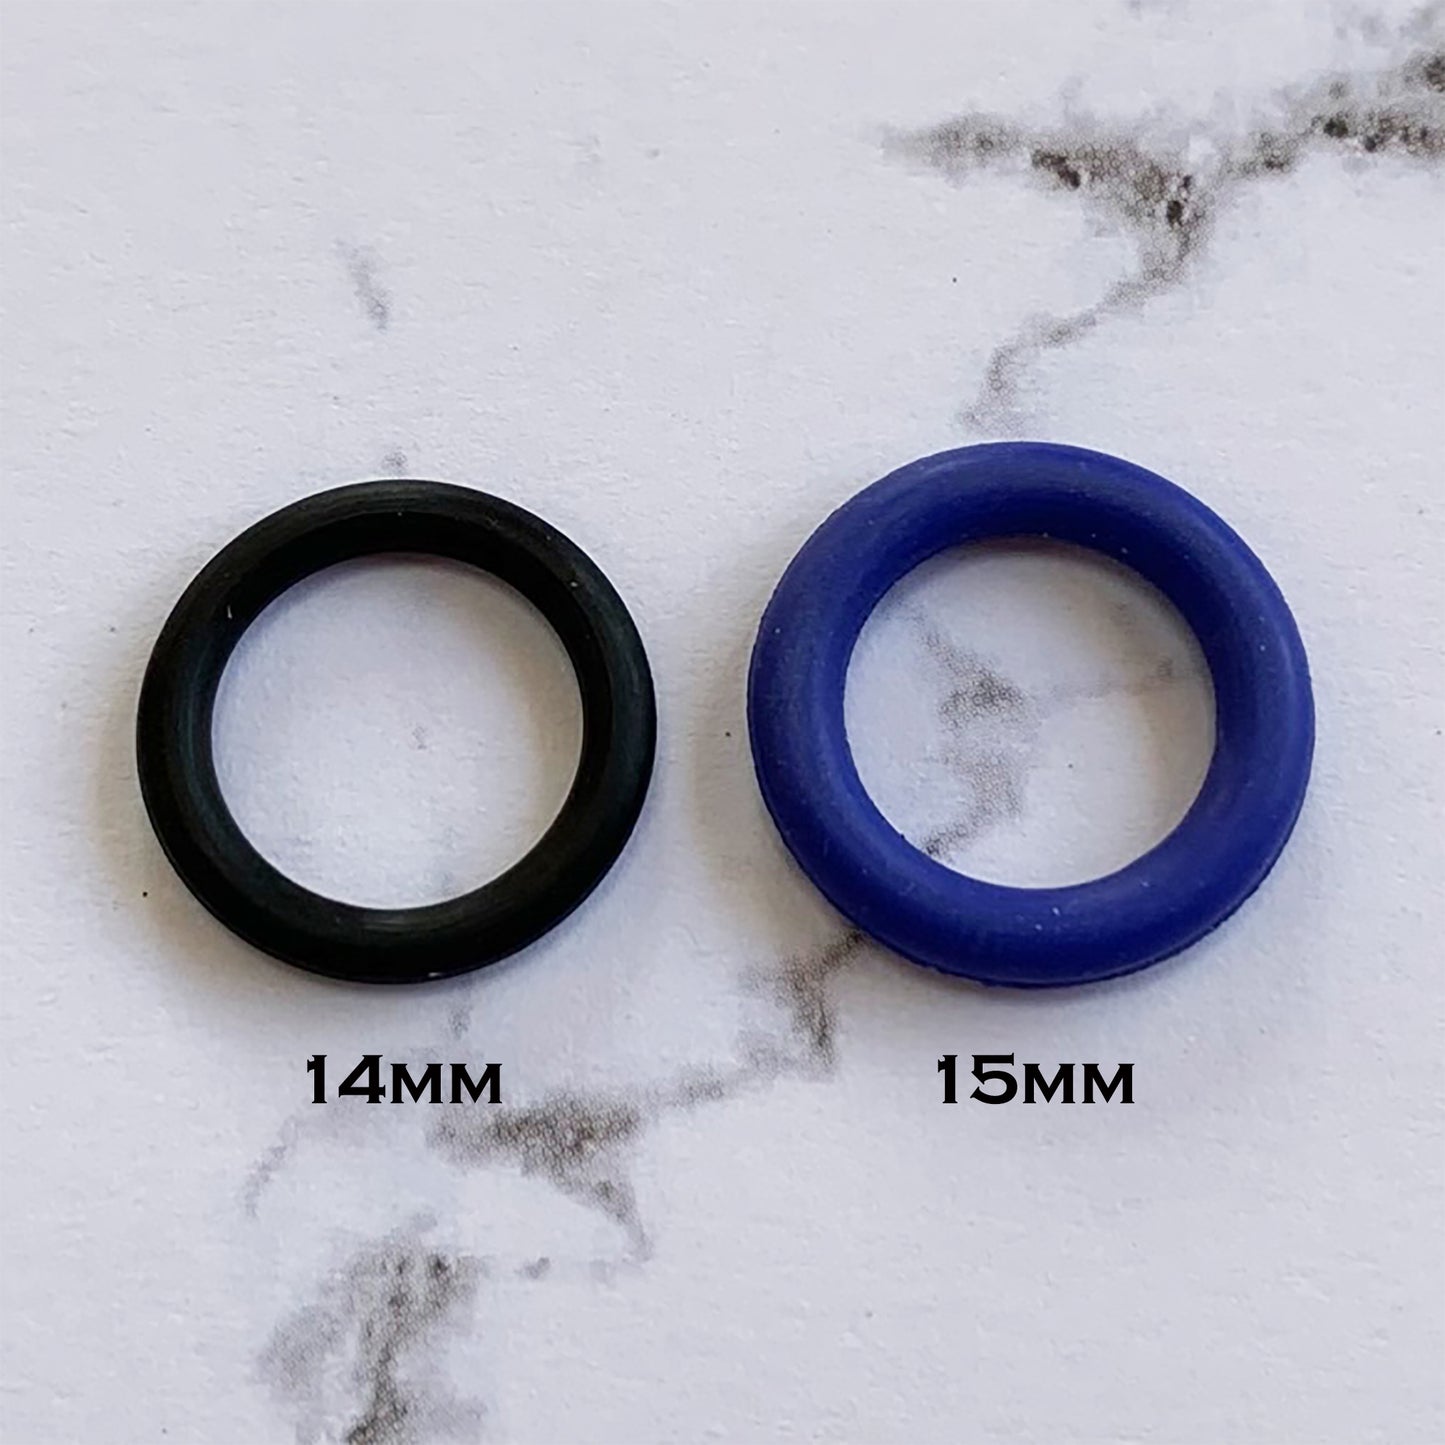 14mm Rubber O-Ring (Inner Diameter: 10mm) - Choose package size